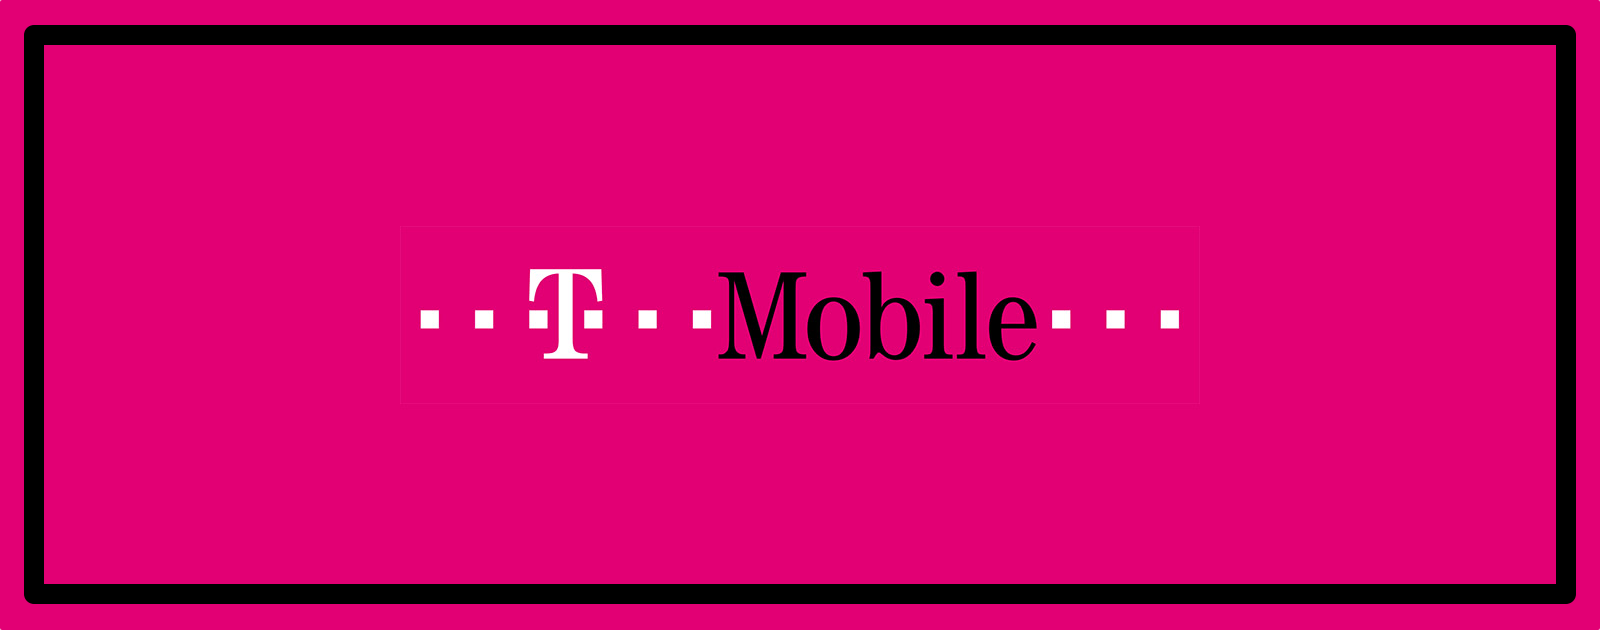 T- Mobile Logo - T Mobile API Exposed Customer Data, Company Said No Evidence Of Data